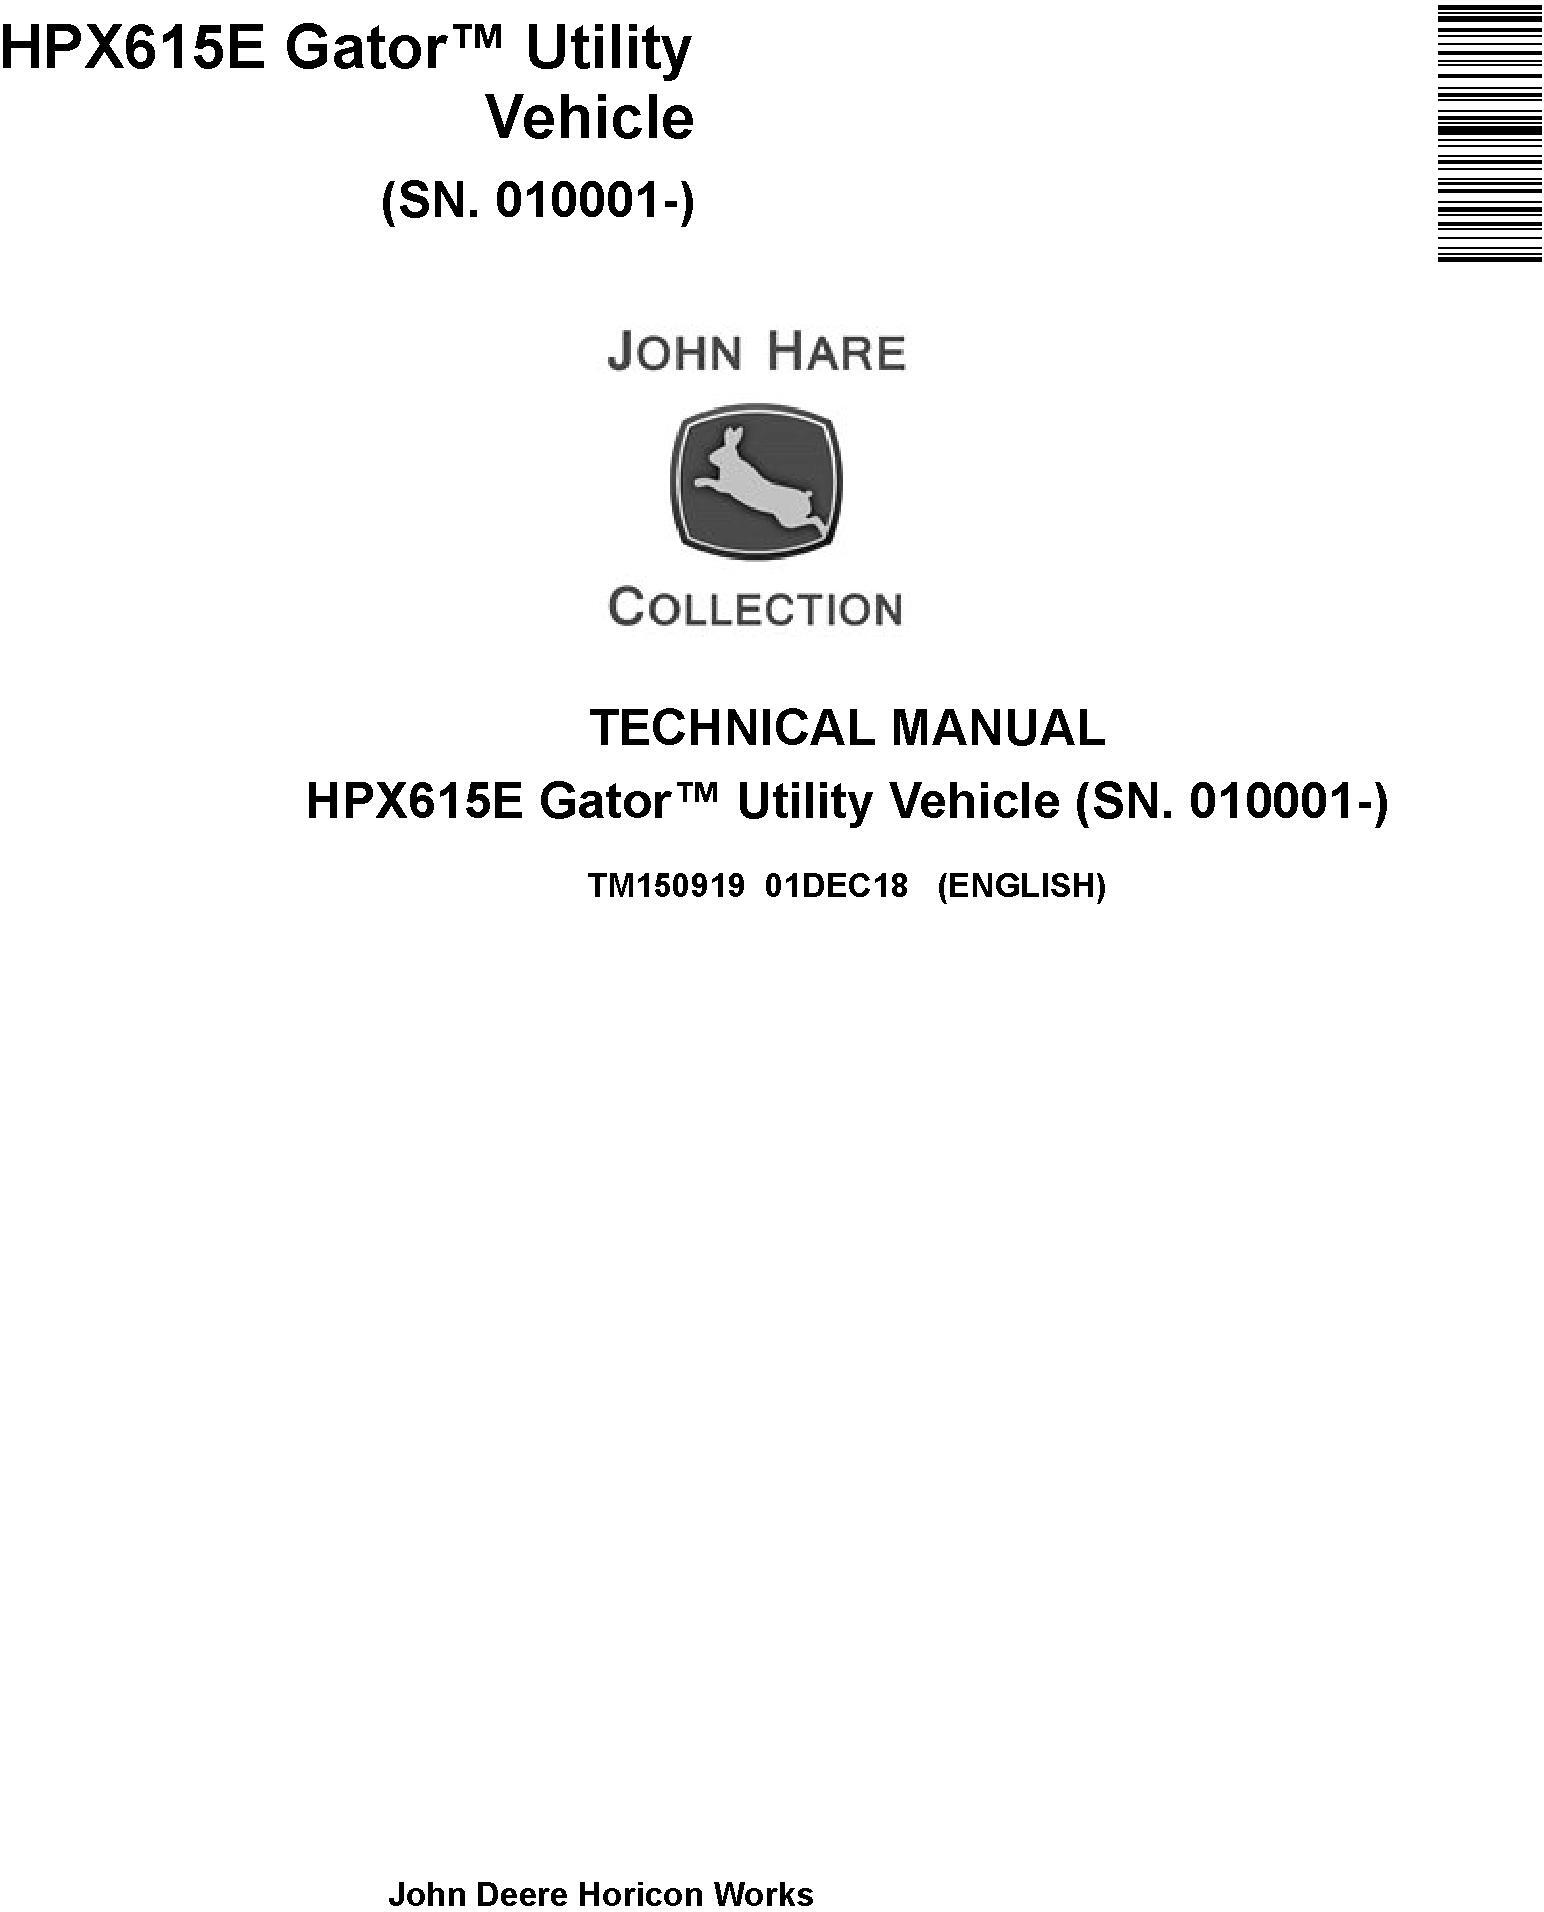 John Deere HPX615E Gator Utility Vehicle (SN. 010001-) Technical Manual (TM150919) - 19301